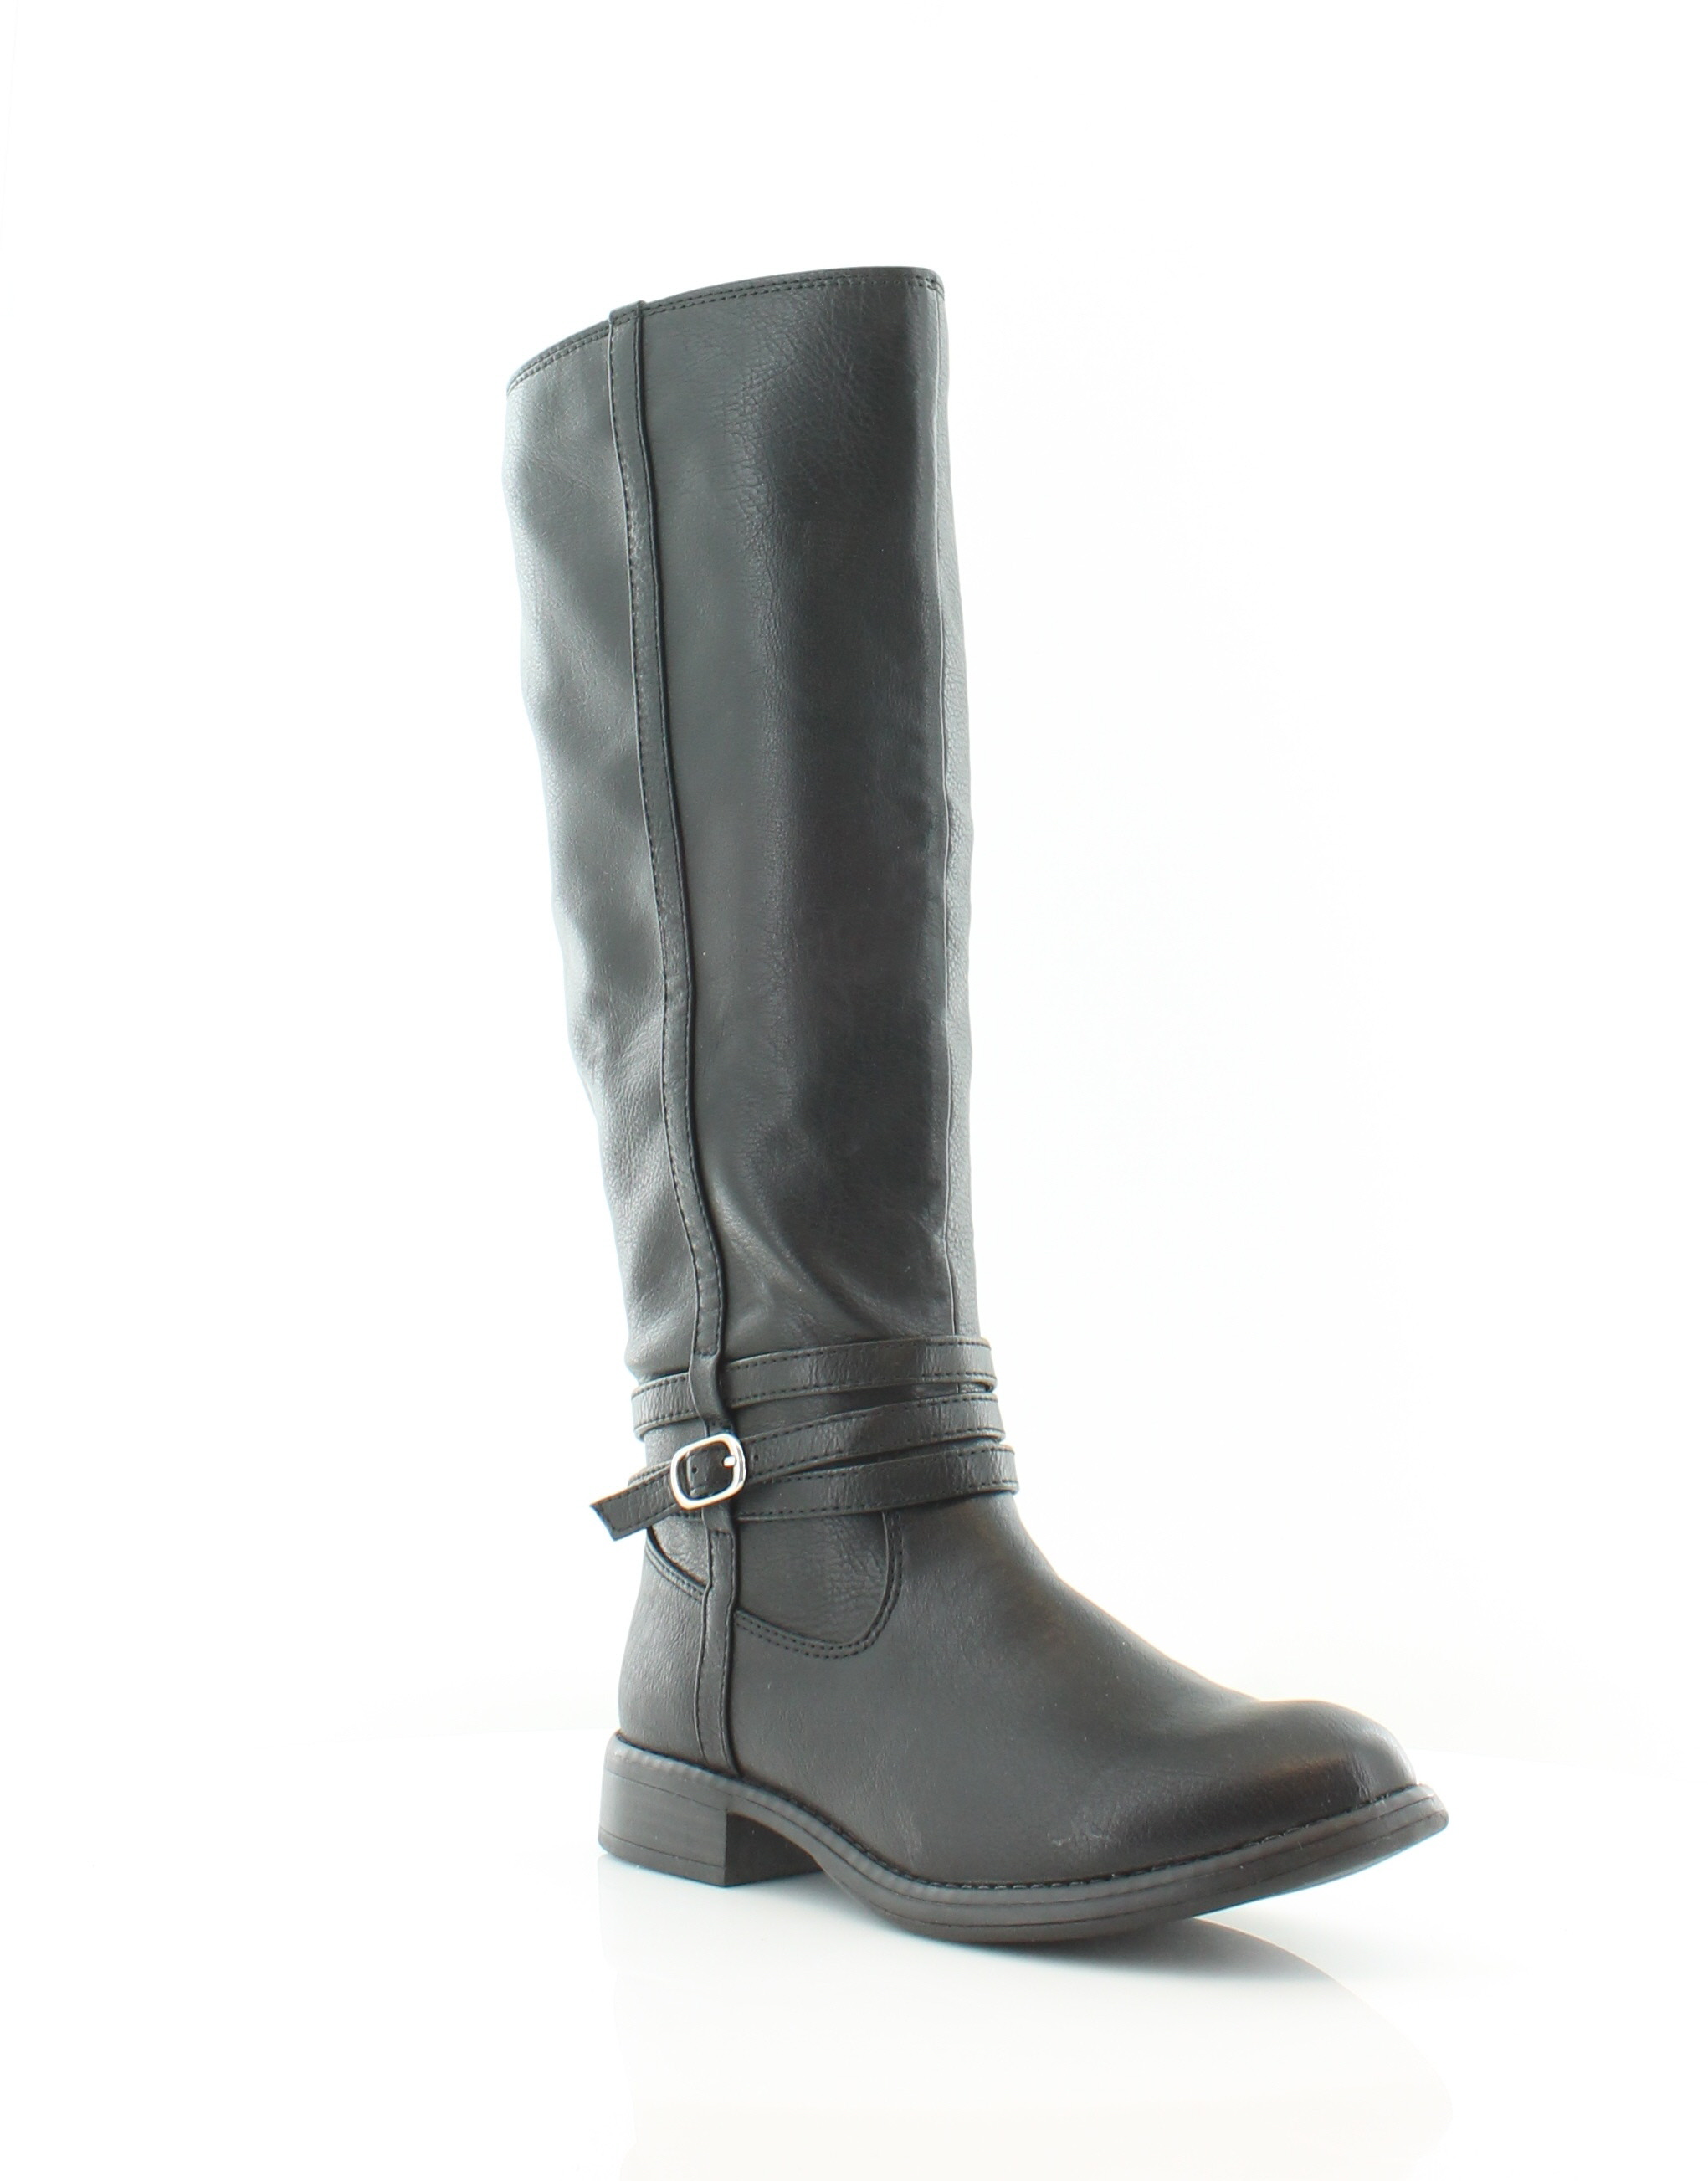 Lauren Conrad Hunter Women's Boots Black Size 6 M | eBay